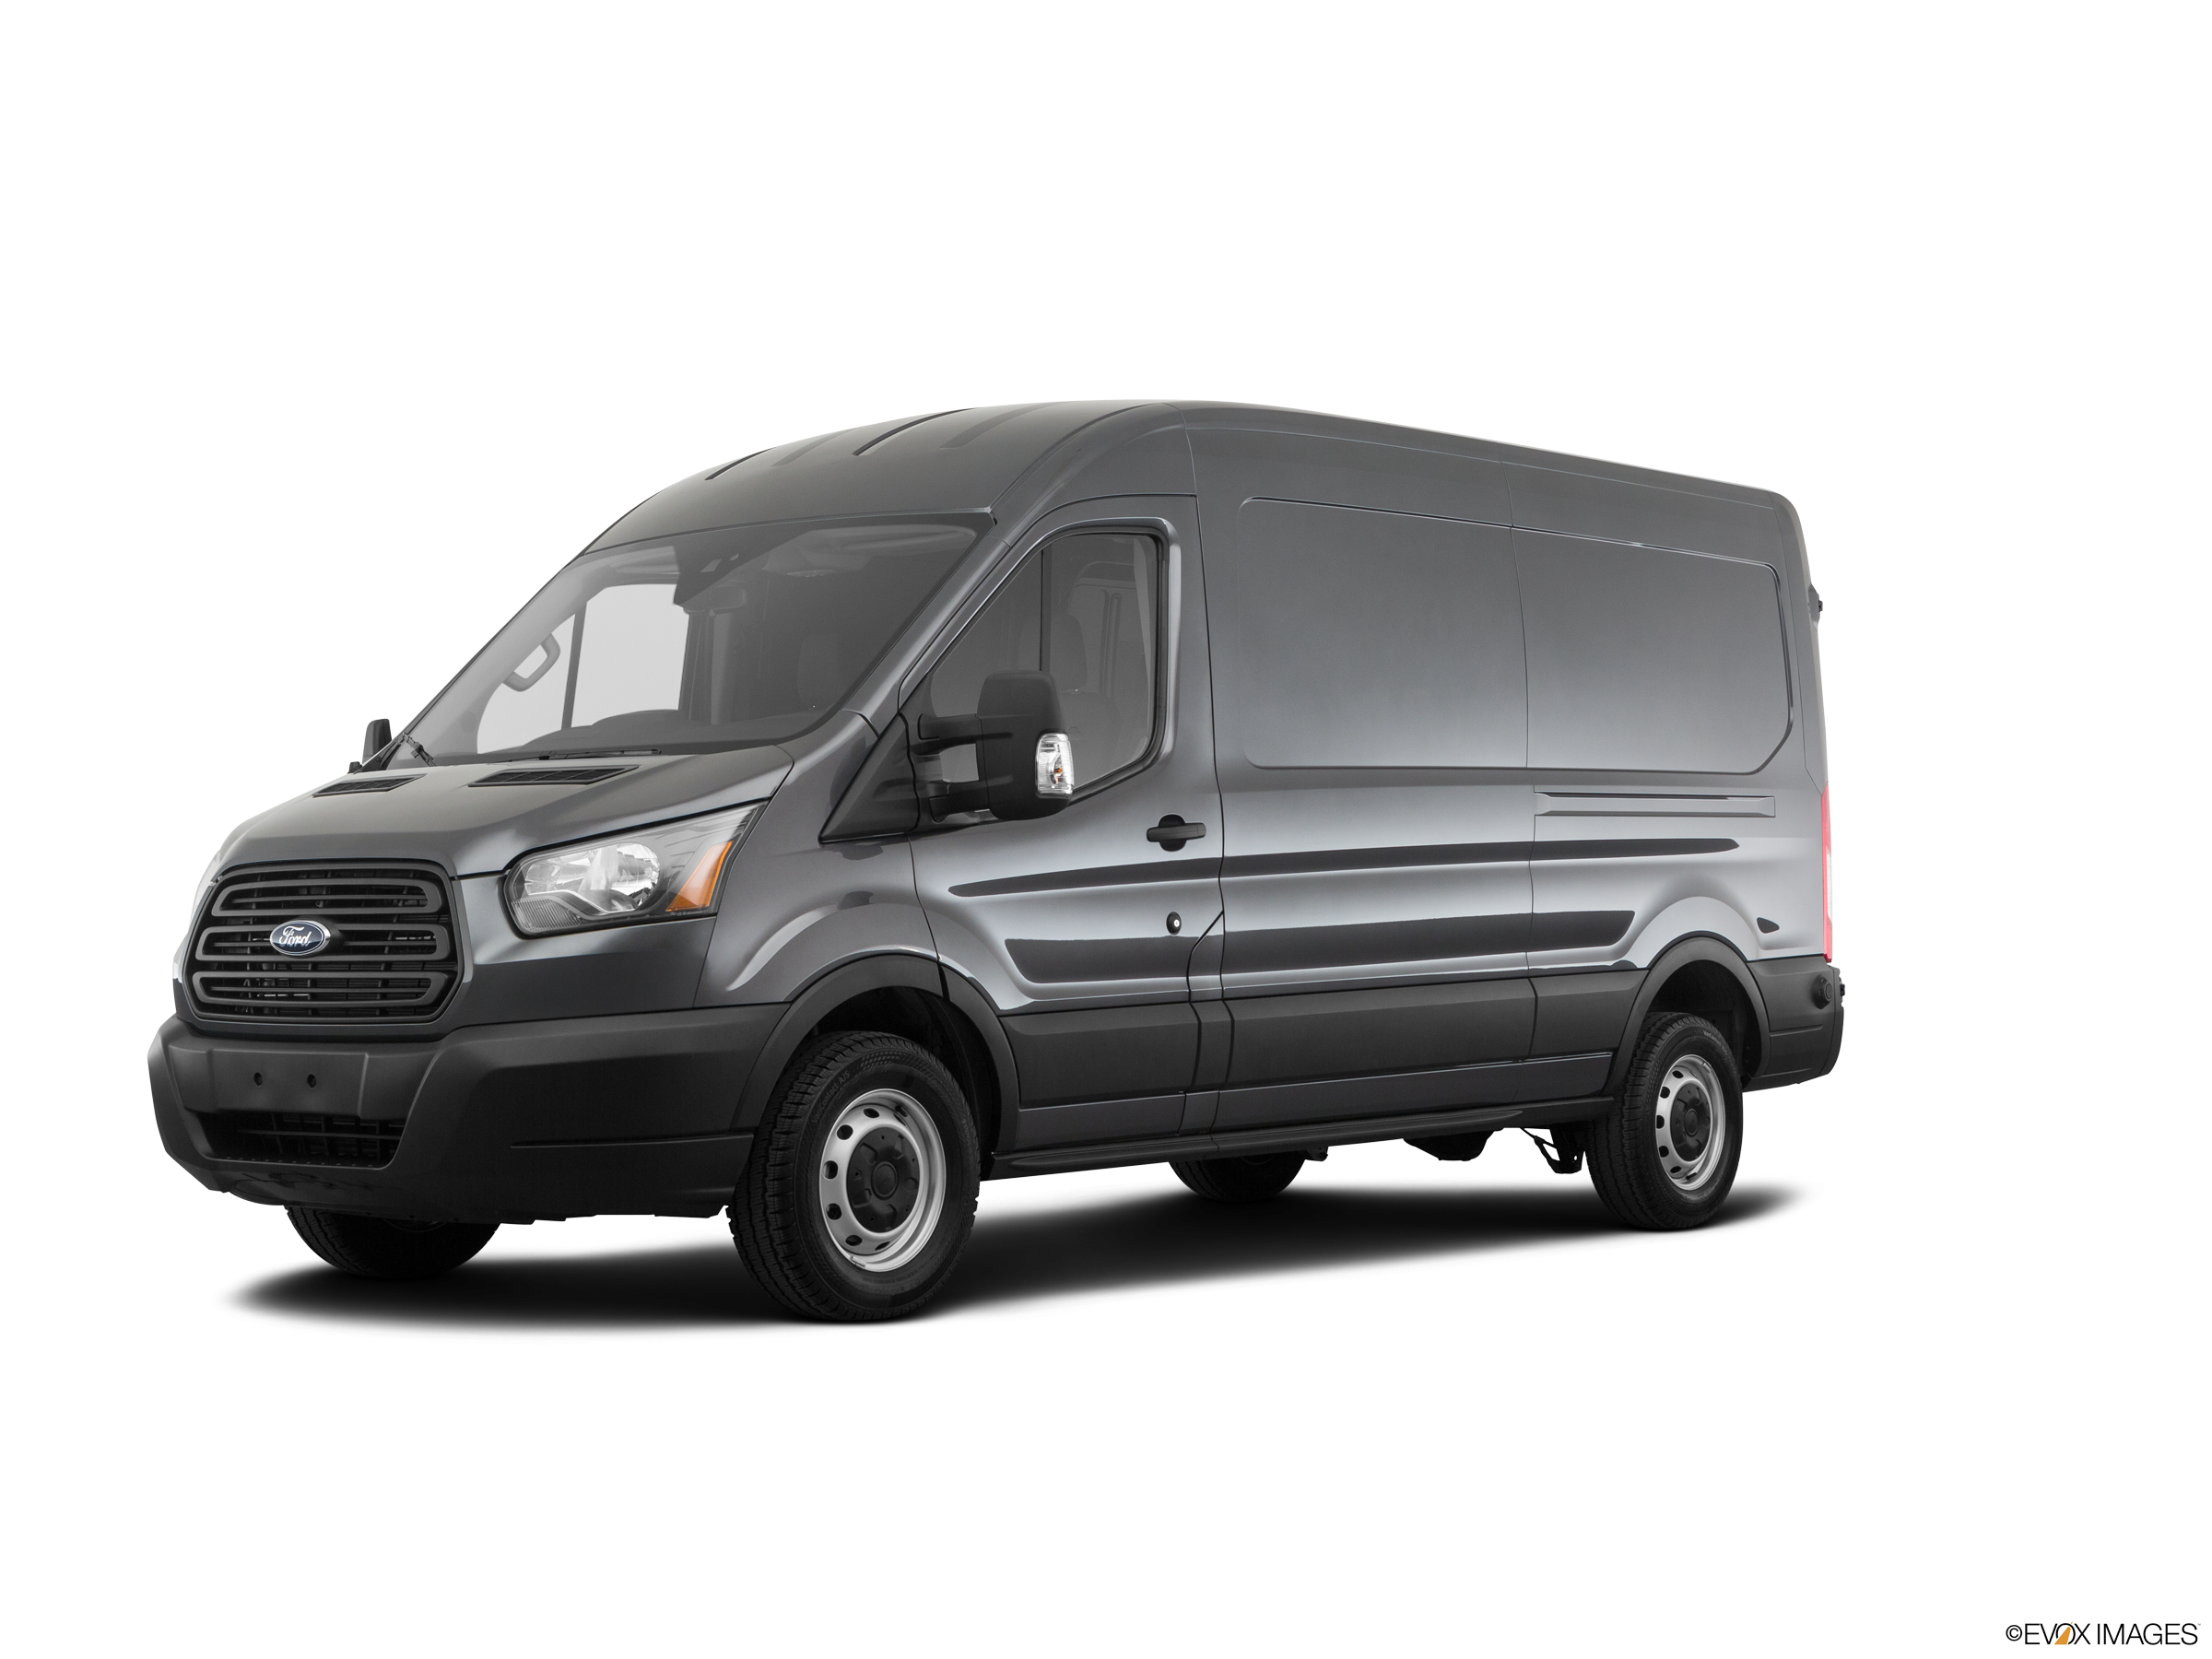 New 2022 Ford Transit 250 Cargo Van Release Date, Premier ...